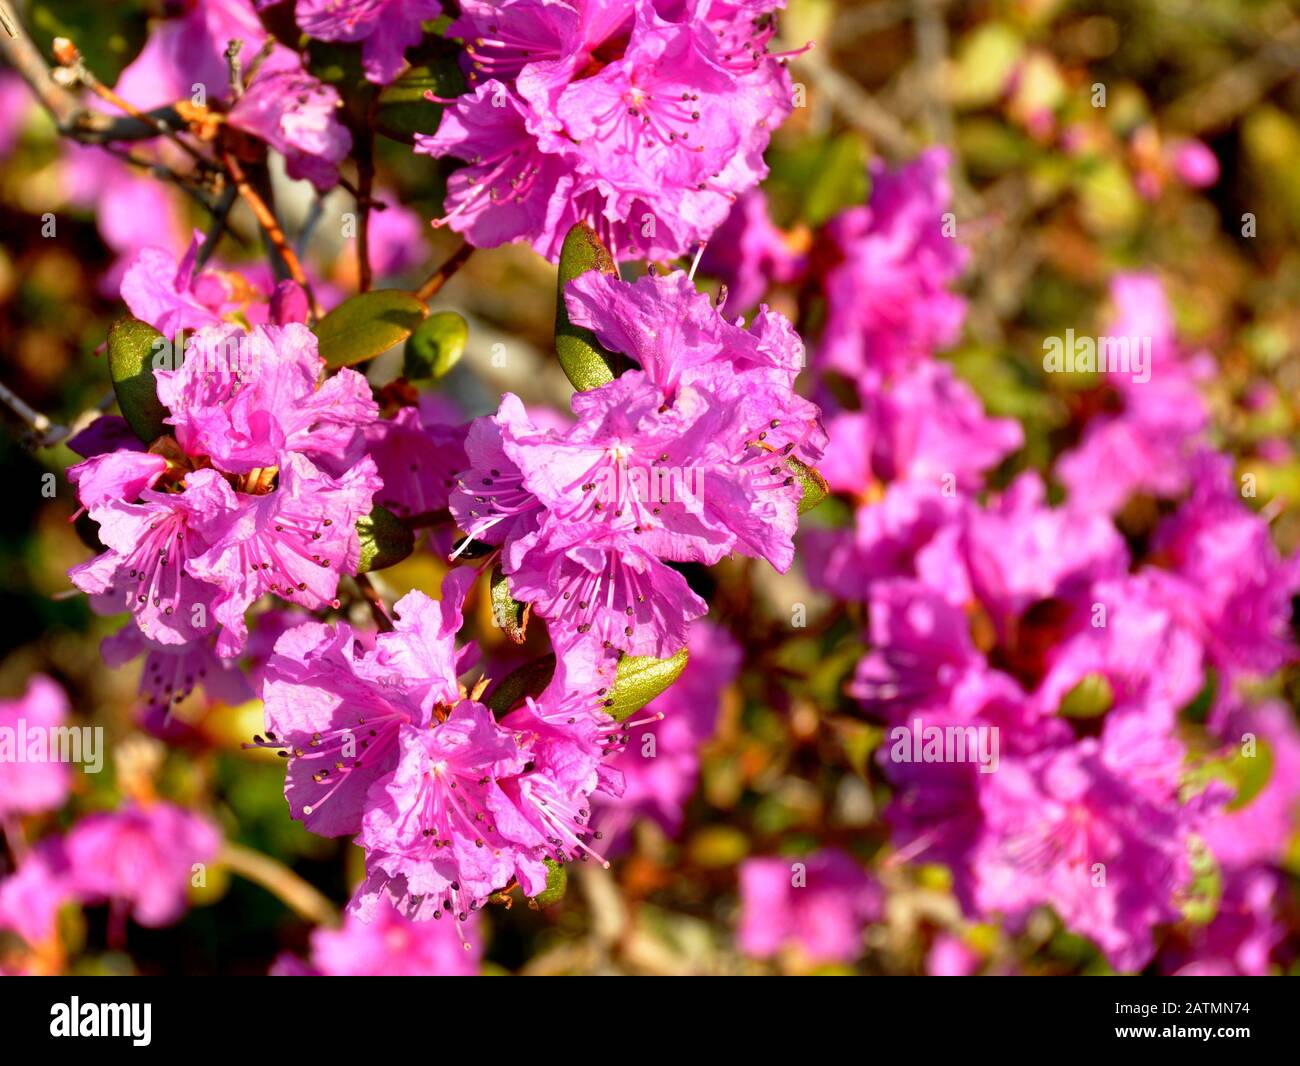 Pink azalea shrub flowering in a garden Stock Photo